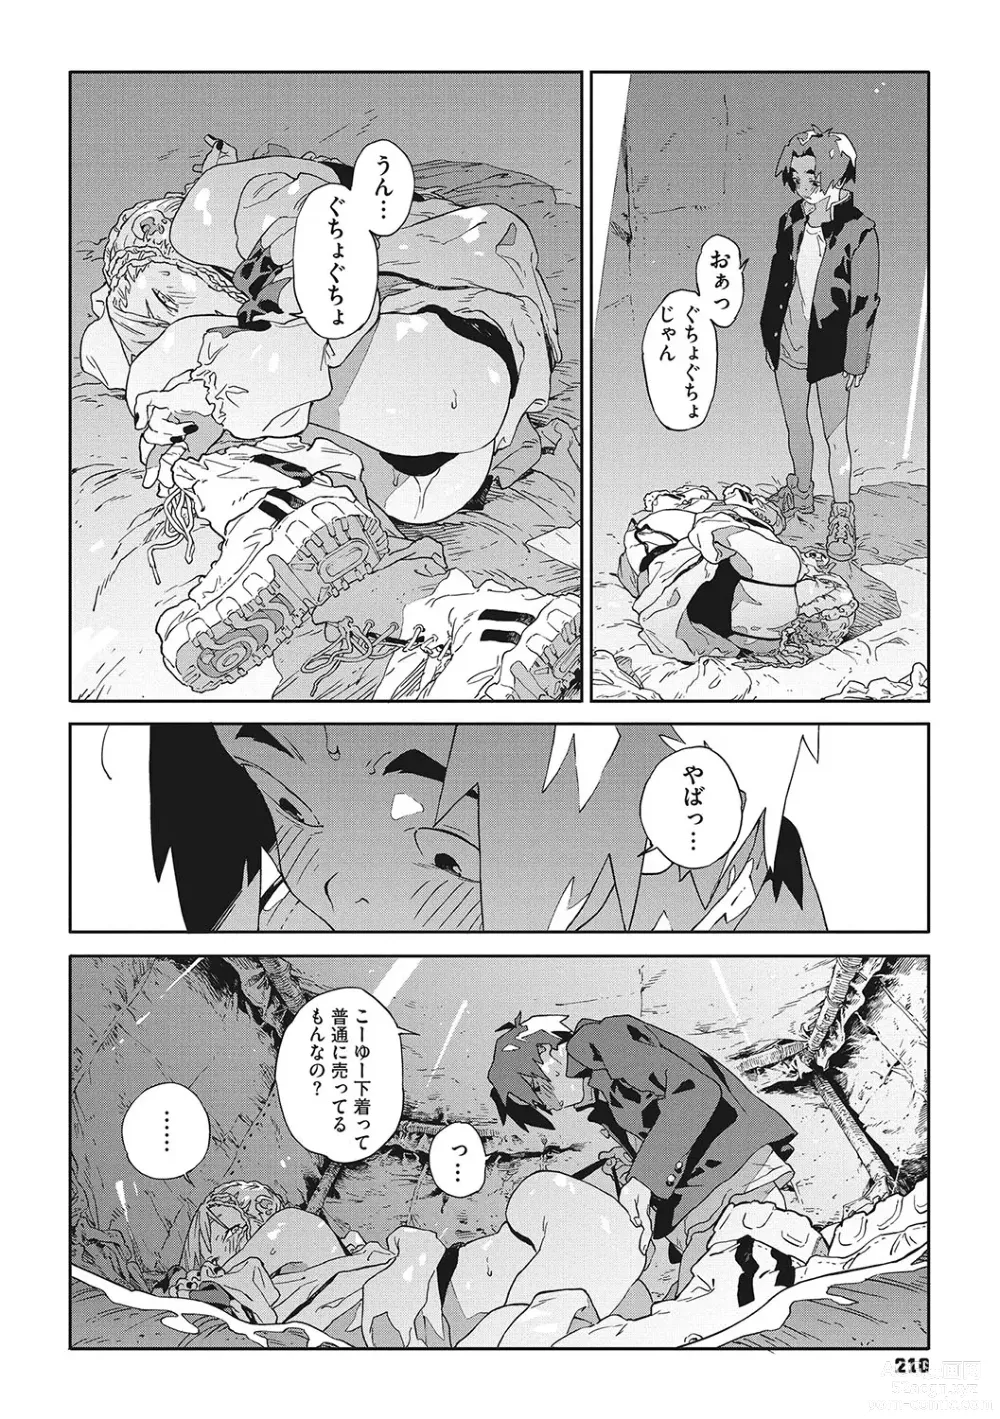 Page 209 of manga Ito o Yoru